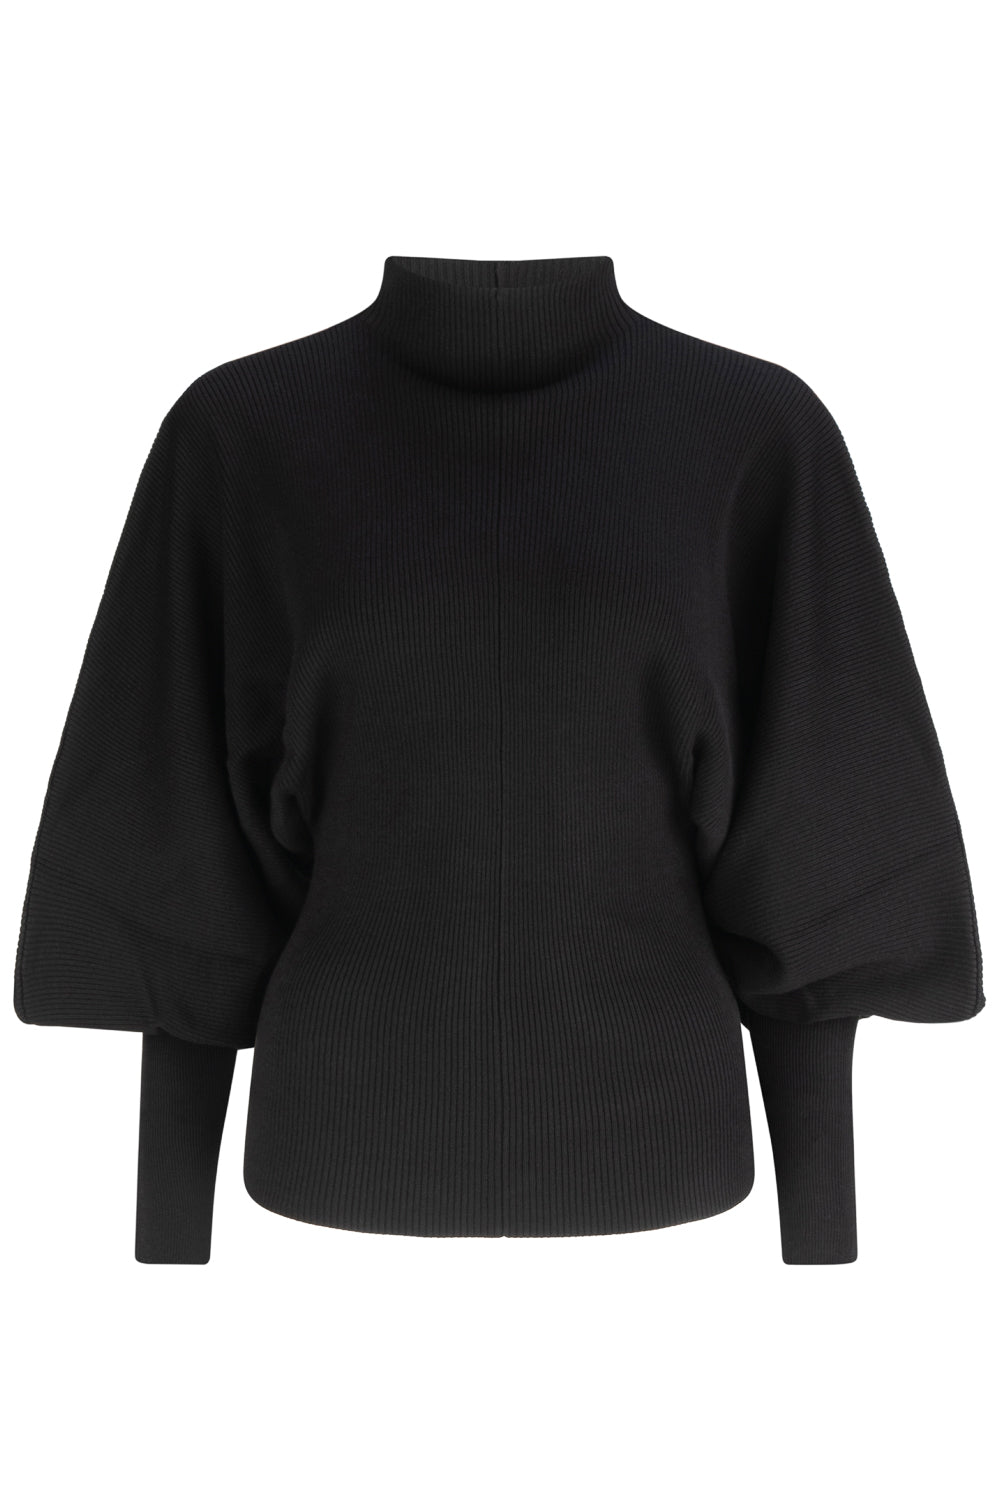 Dref By D Women's Elm Ribbed Sweater - Black